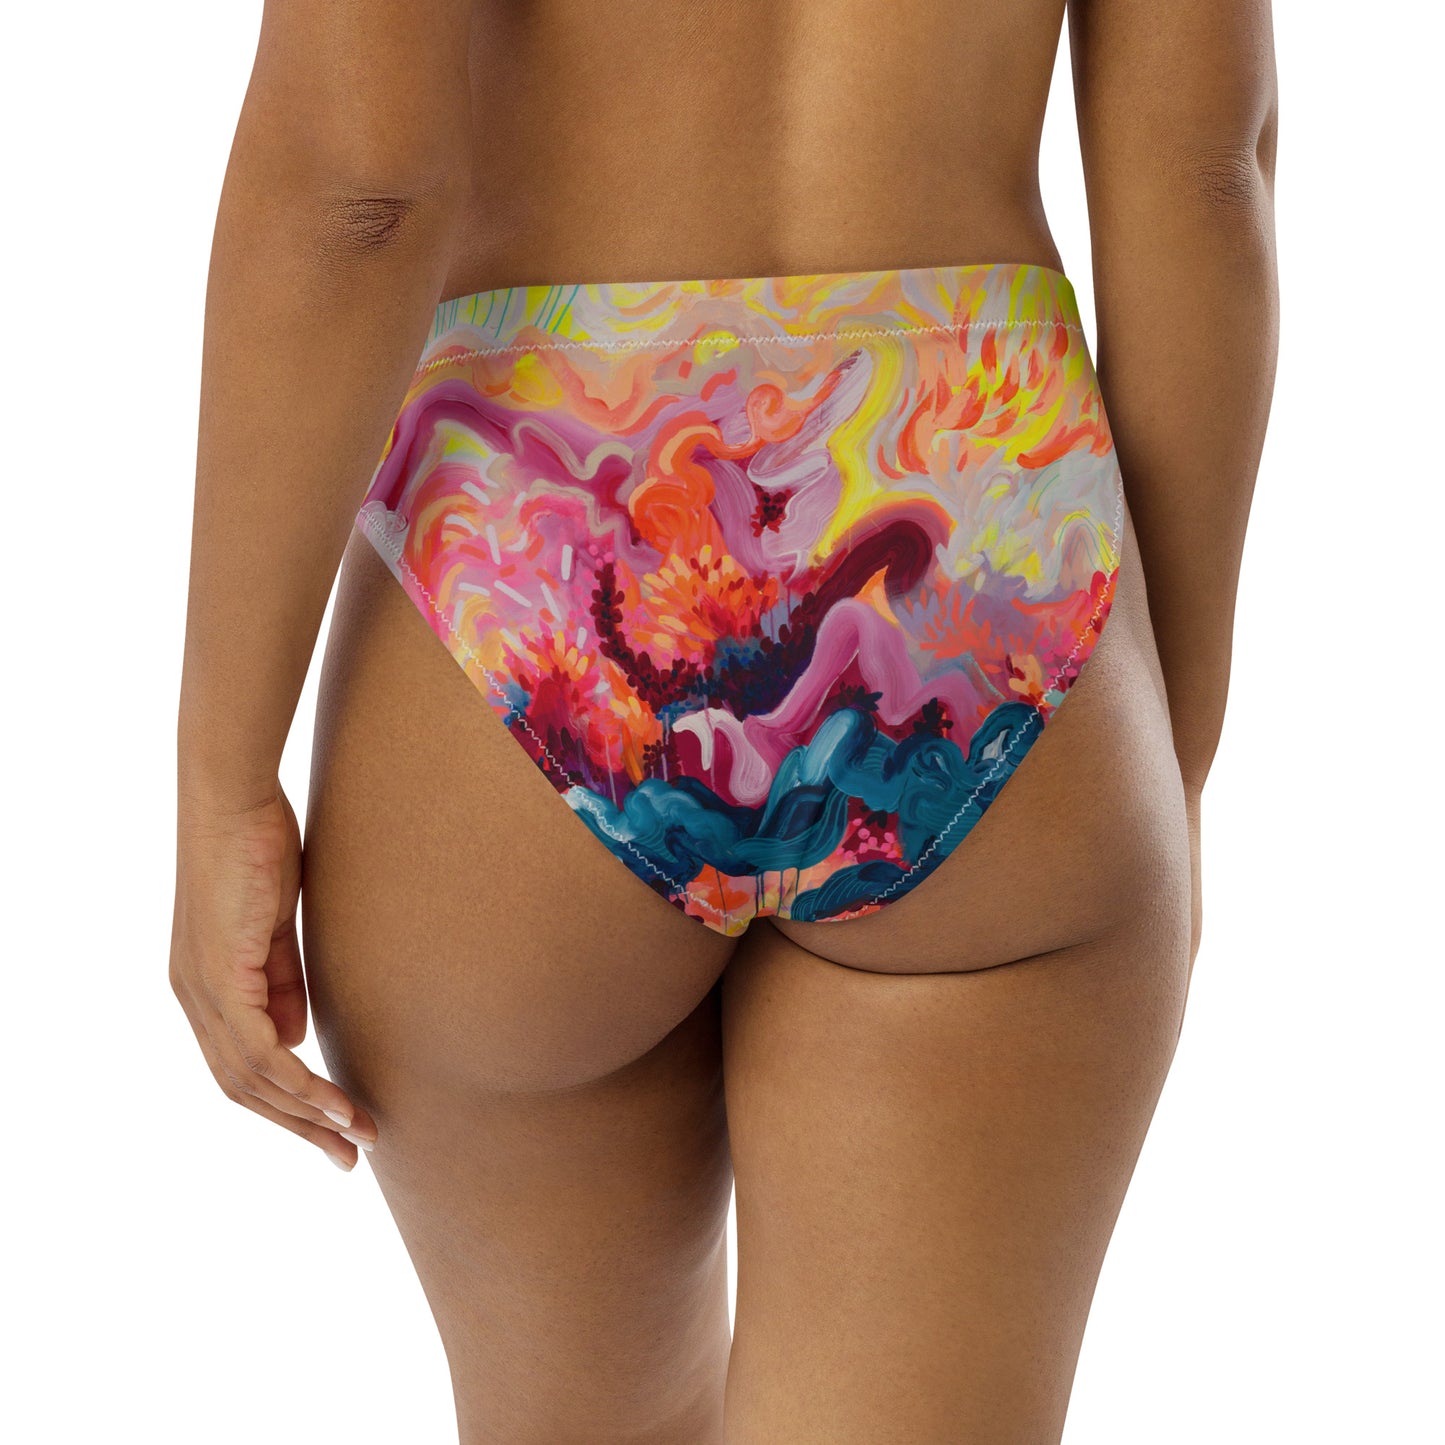 Wild Fire high-waisted bikini Bottoms by Julie Amlin